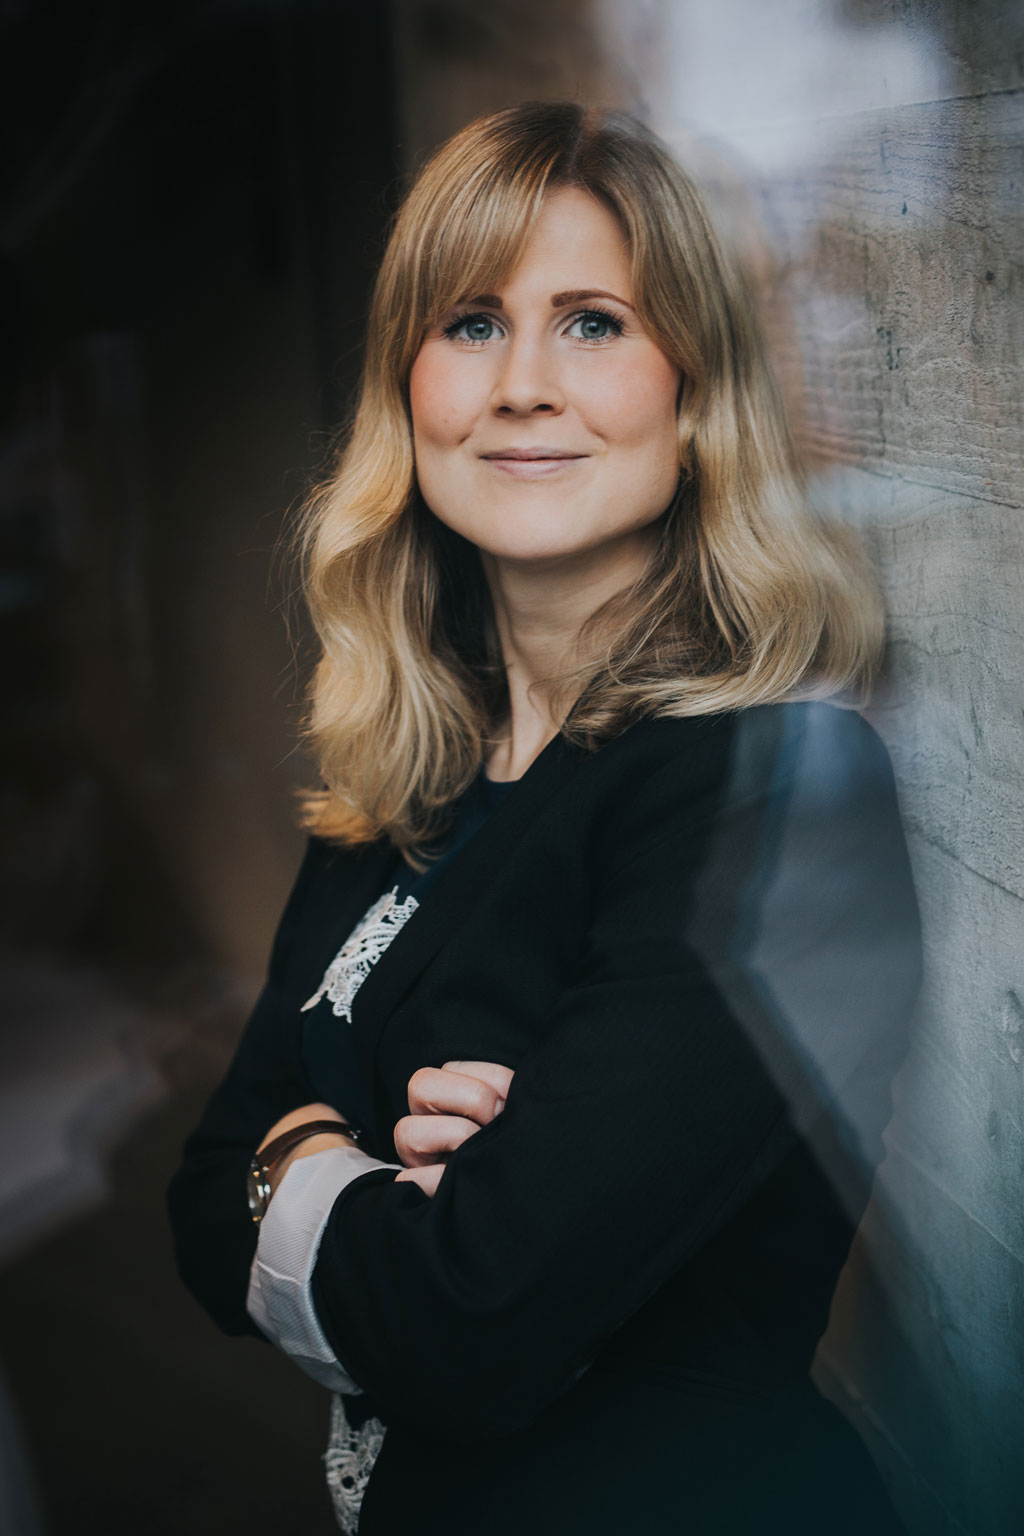 Sofia Fölster, Female Economist of the Year 2019. Picture taken at Artipelag by photographer Juliana Wiklund.